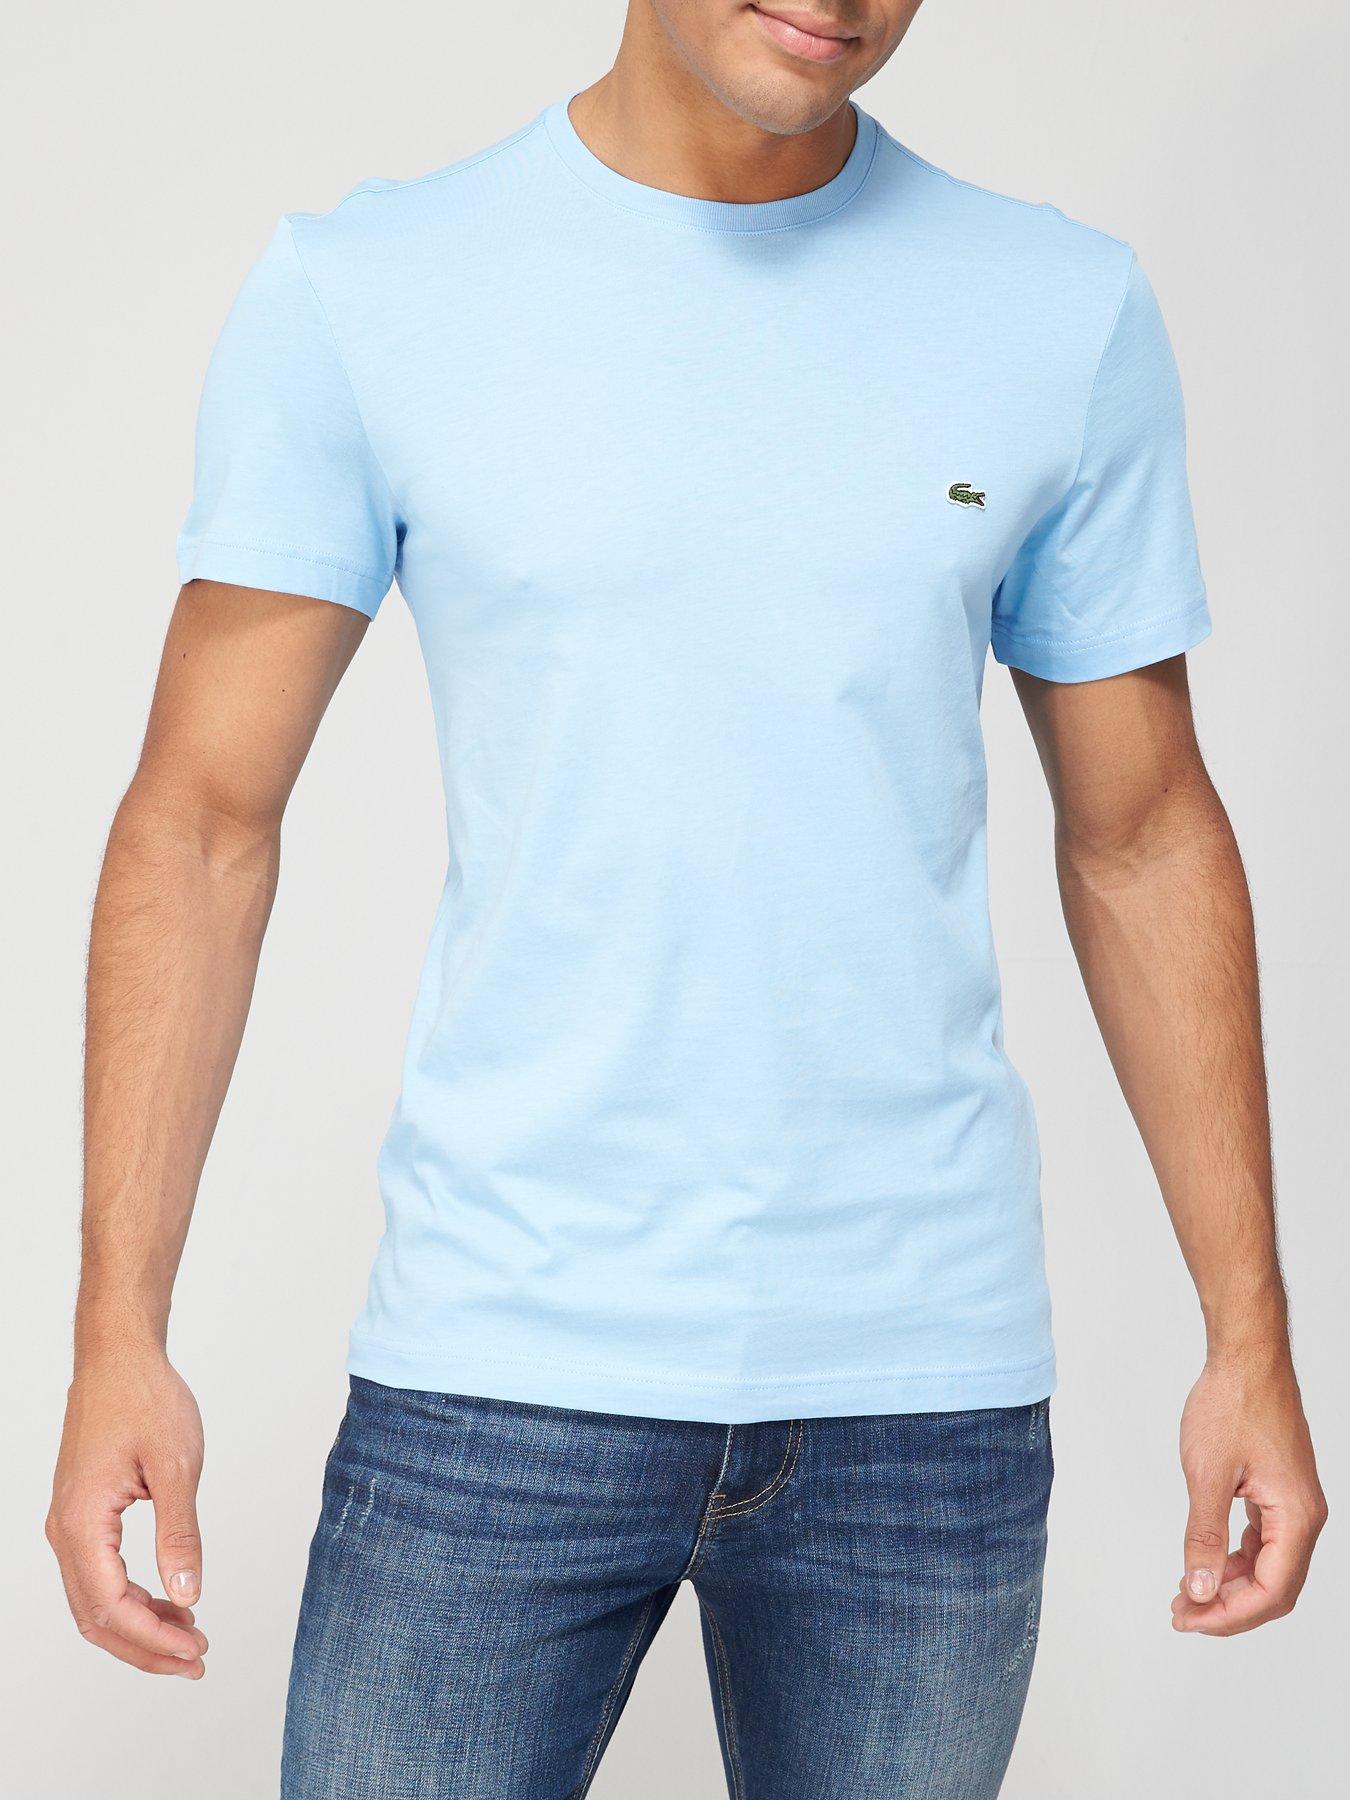  Mini Croc T-shirt - Light Blue